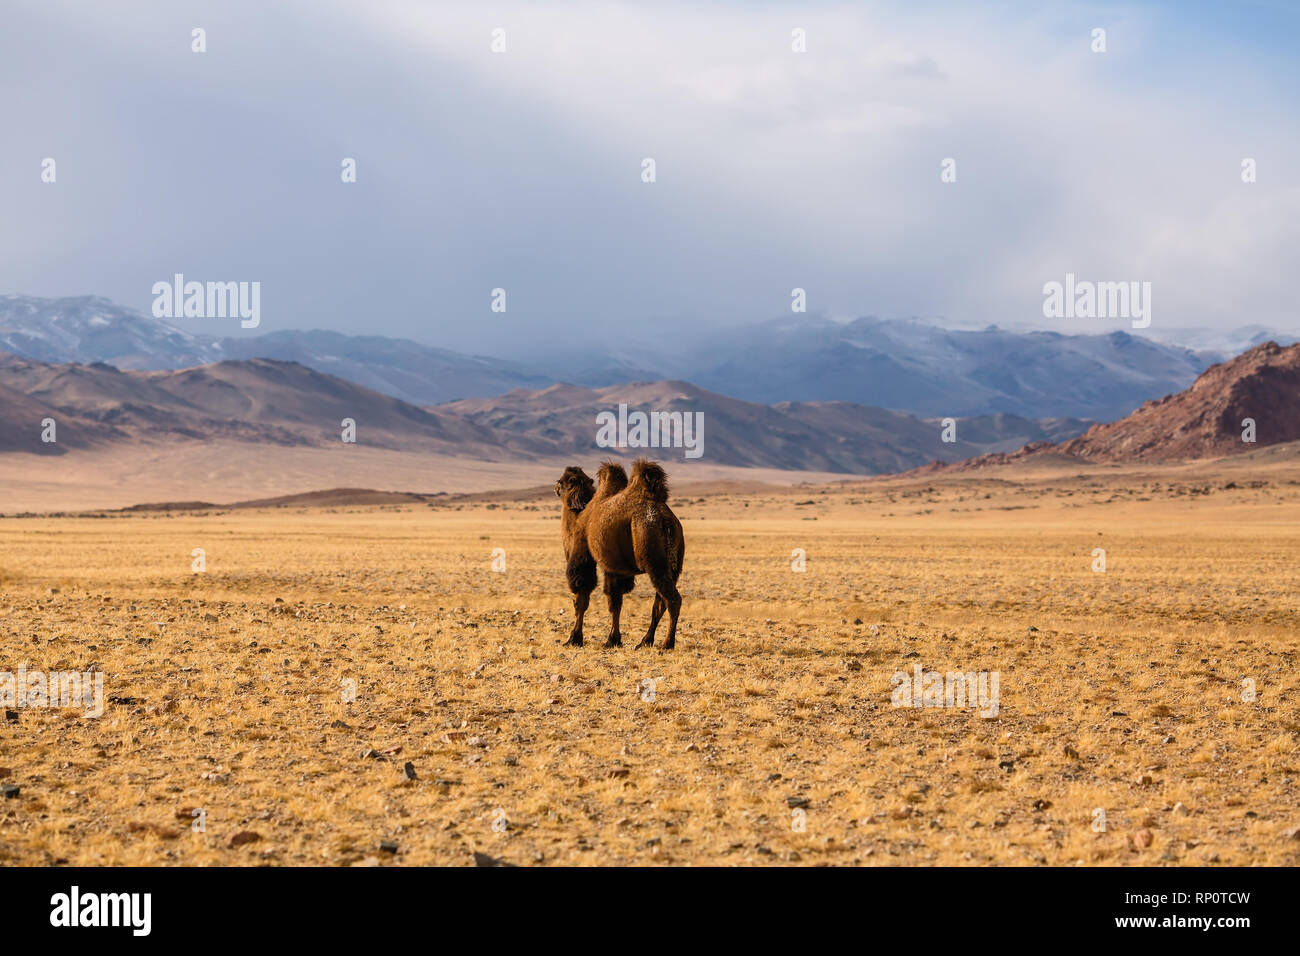 Camel in the desert steppes of Mongolia. Stock Photo